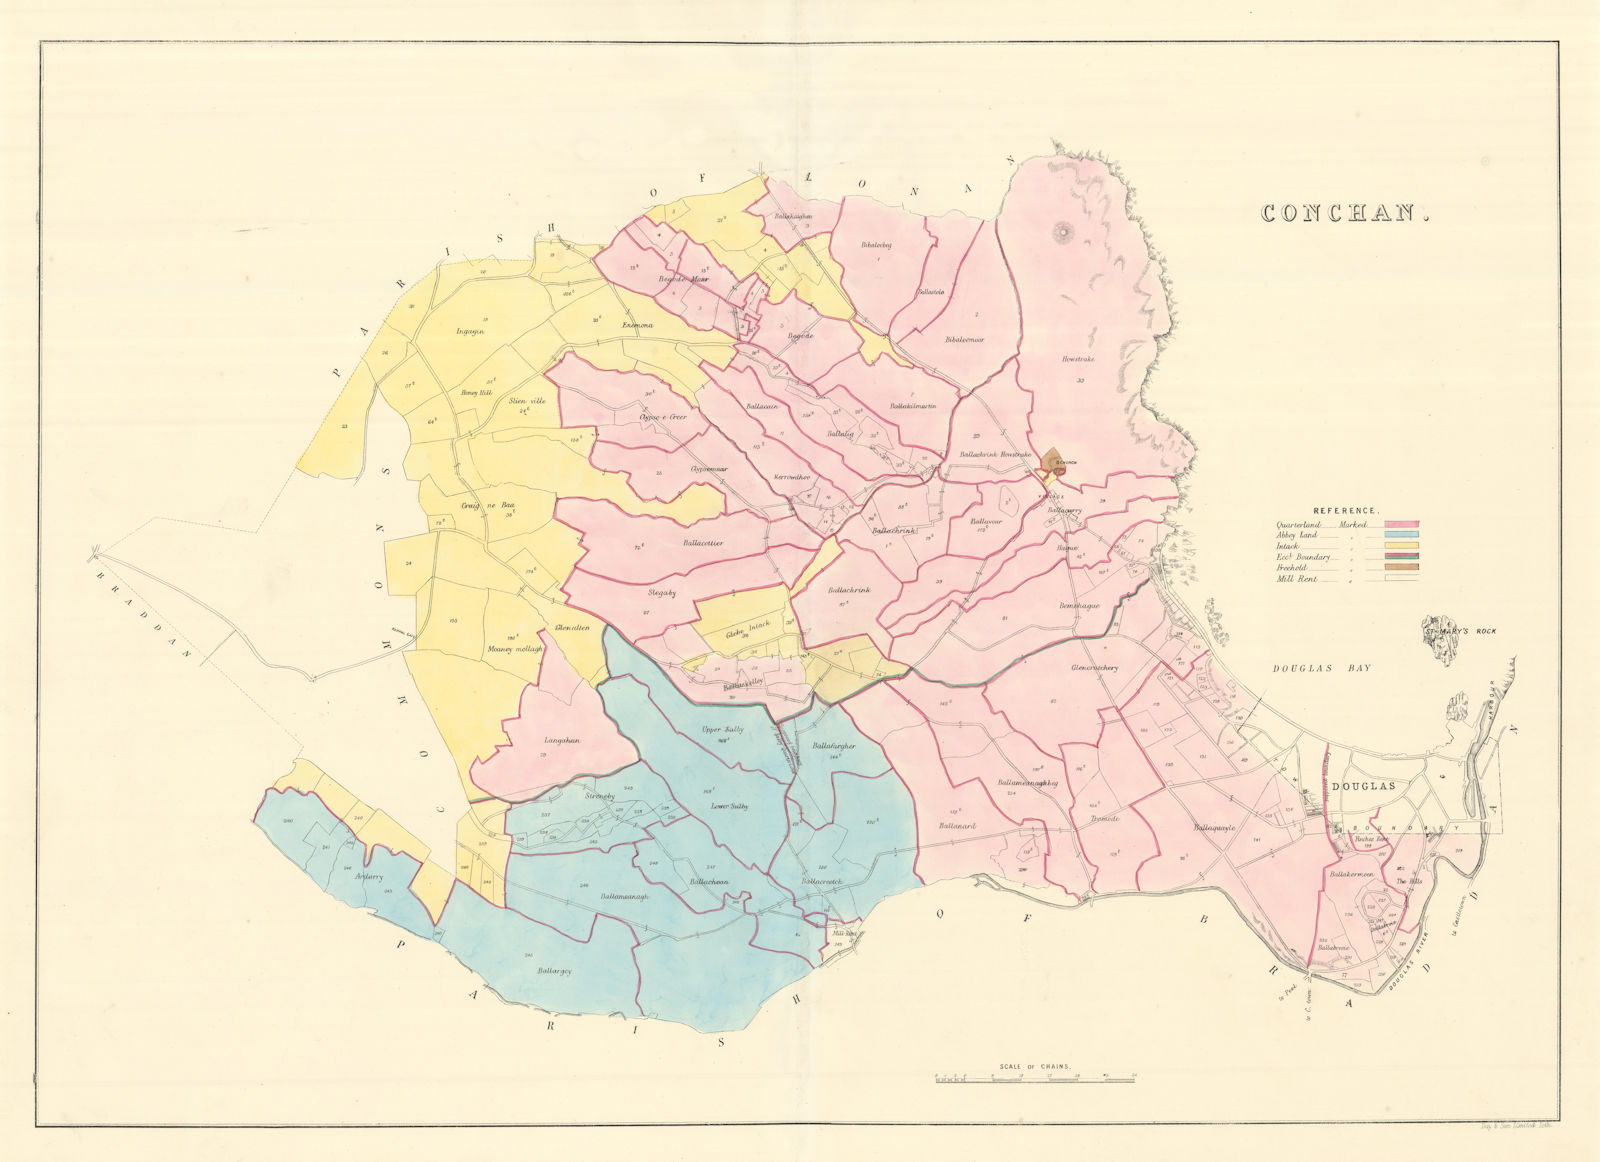 Conchan [Onchan] Parish & Douglas, Middle Sheading, Isle of Man. Woods 1829 map